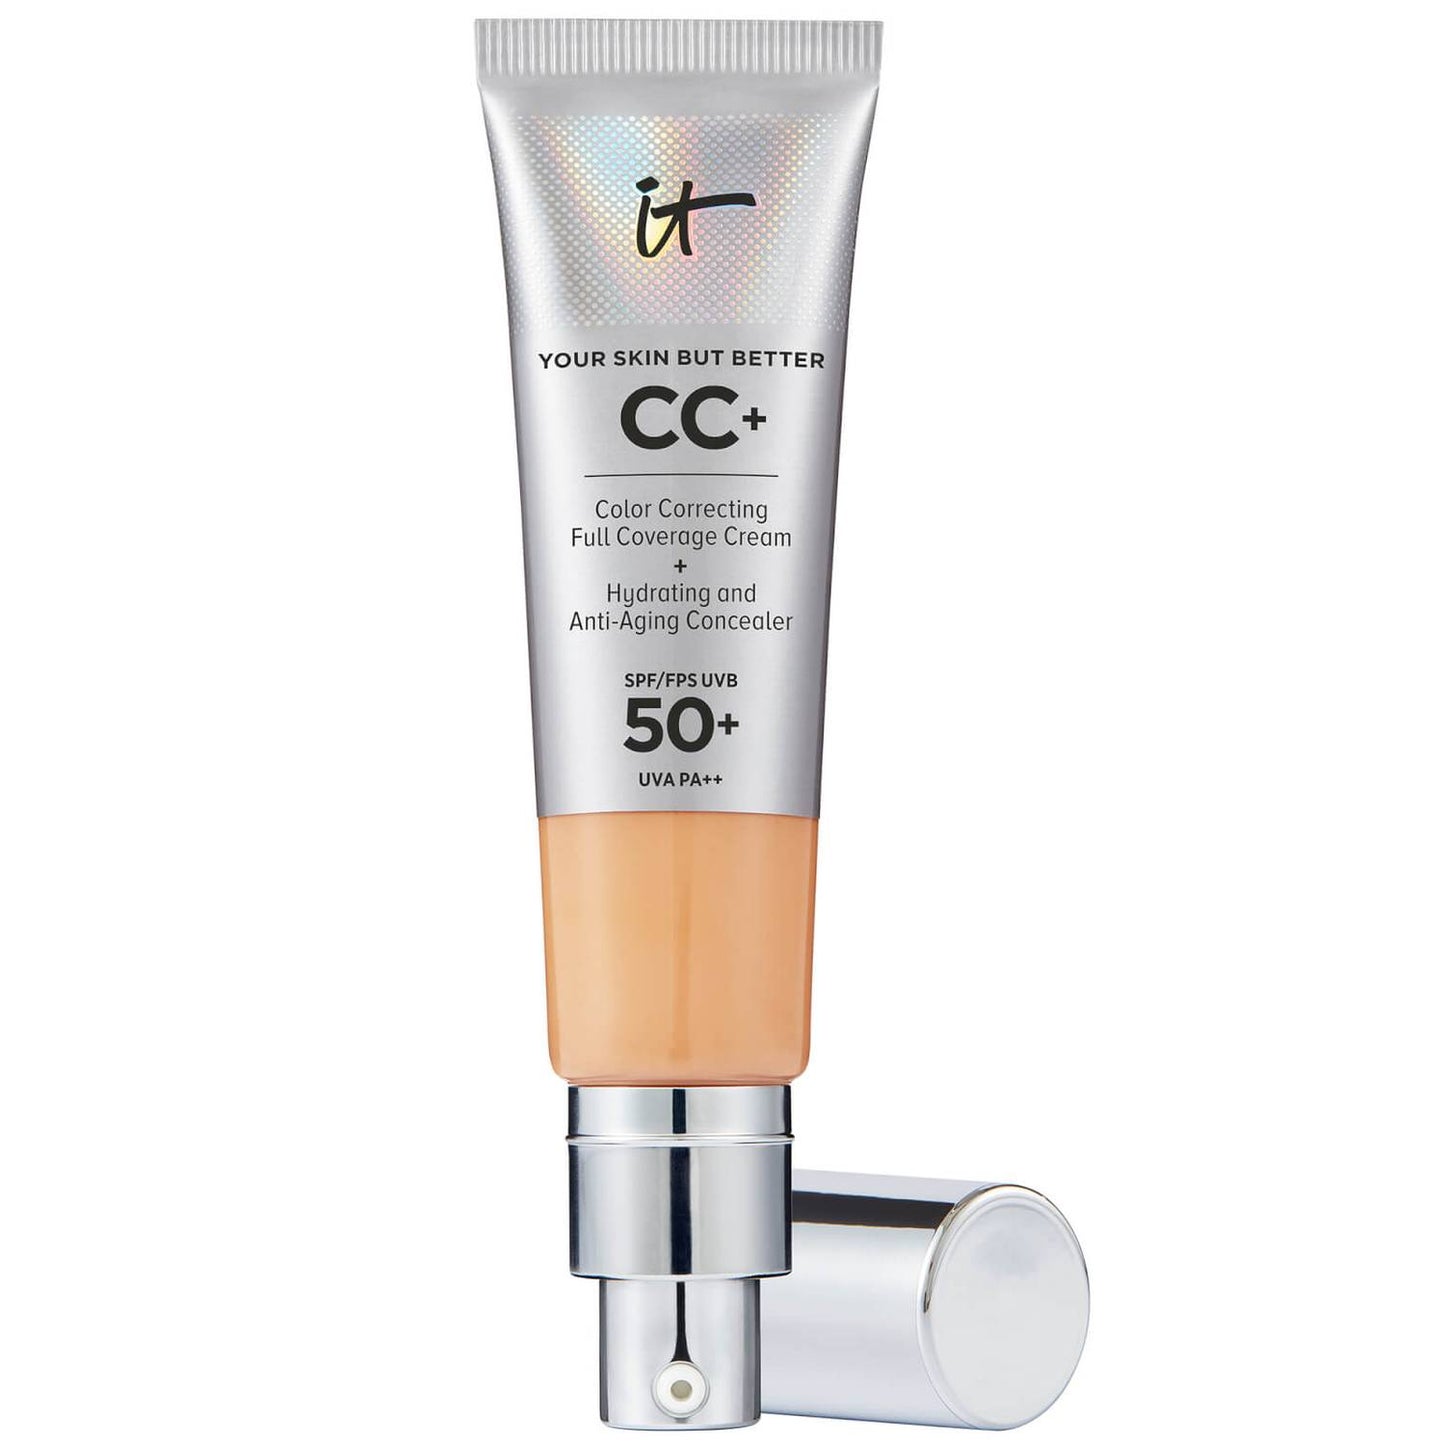 IT Cosmetics Your Skin But Better CC+ Cream with SPF50 32ml - Medium Tan